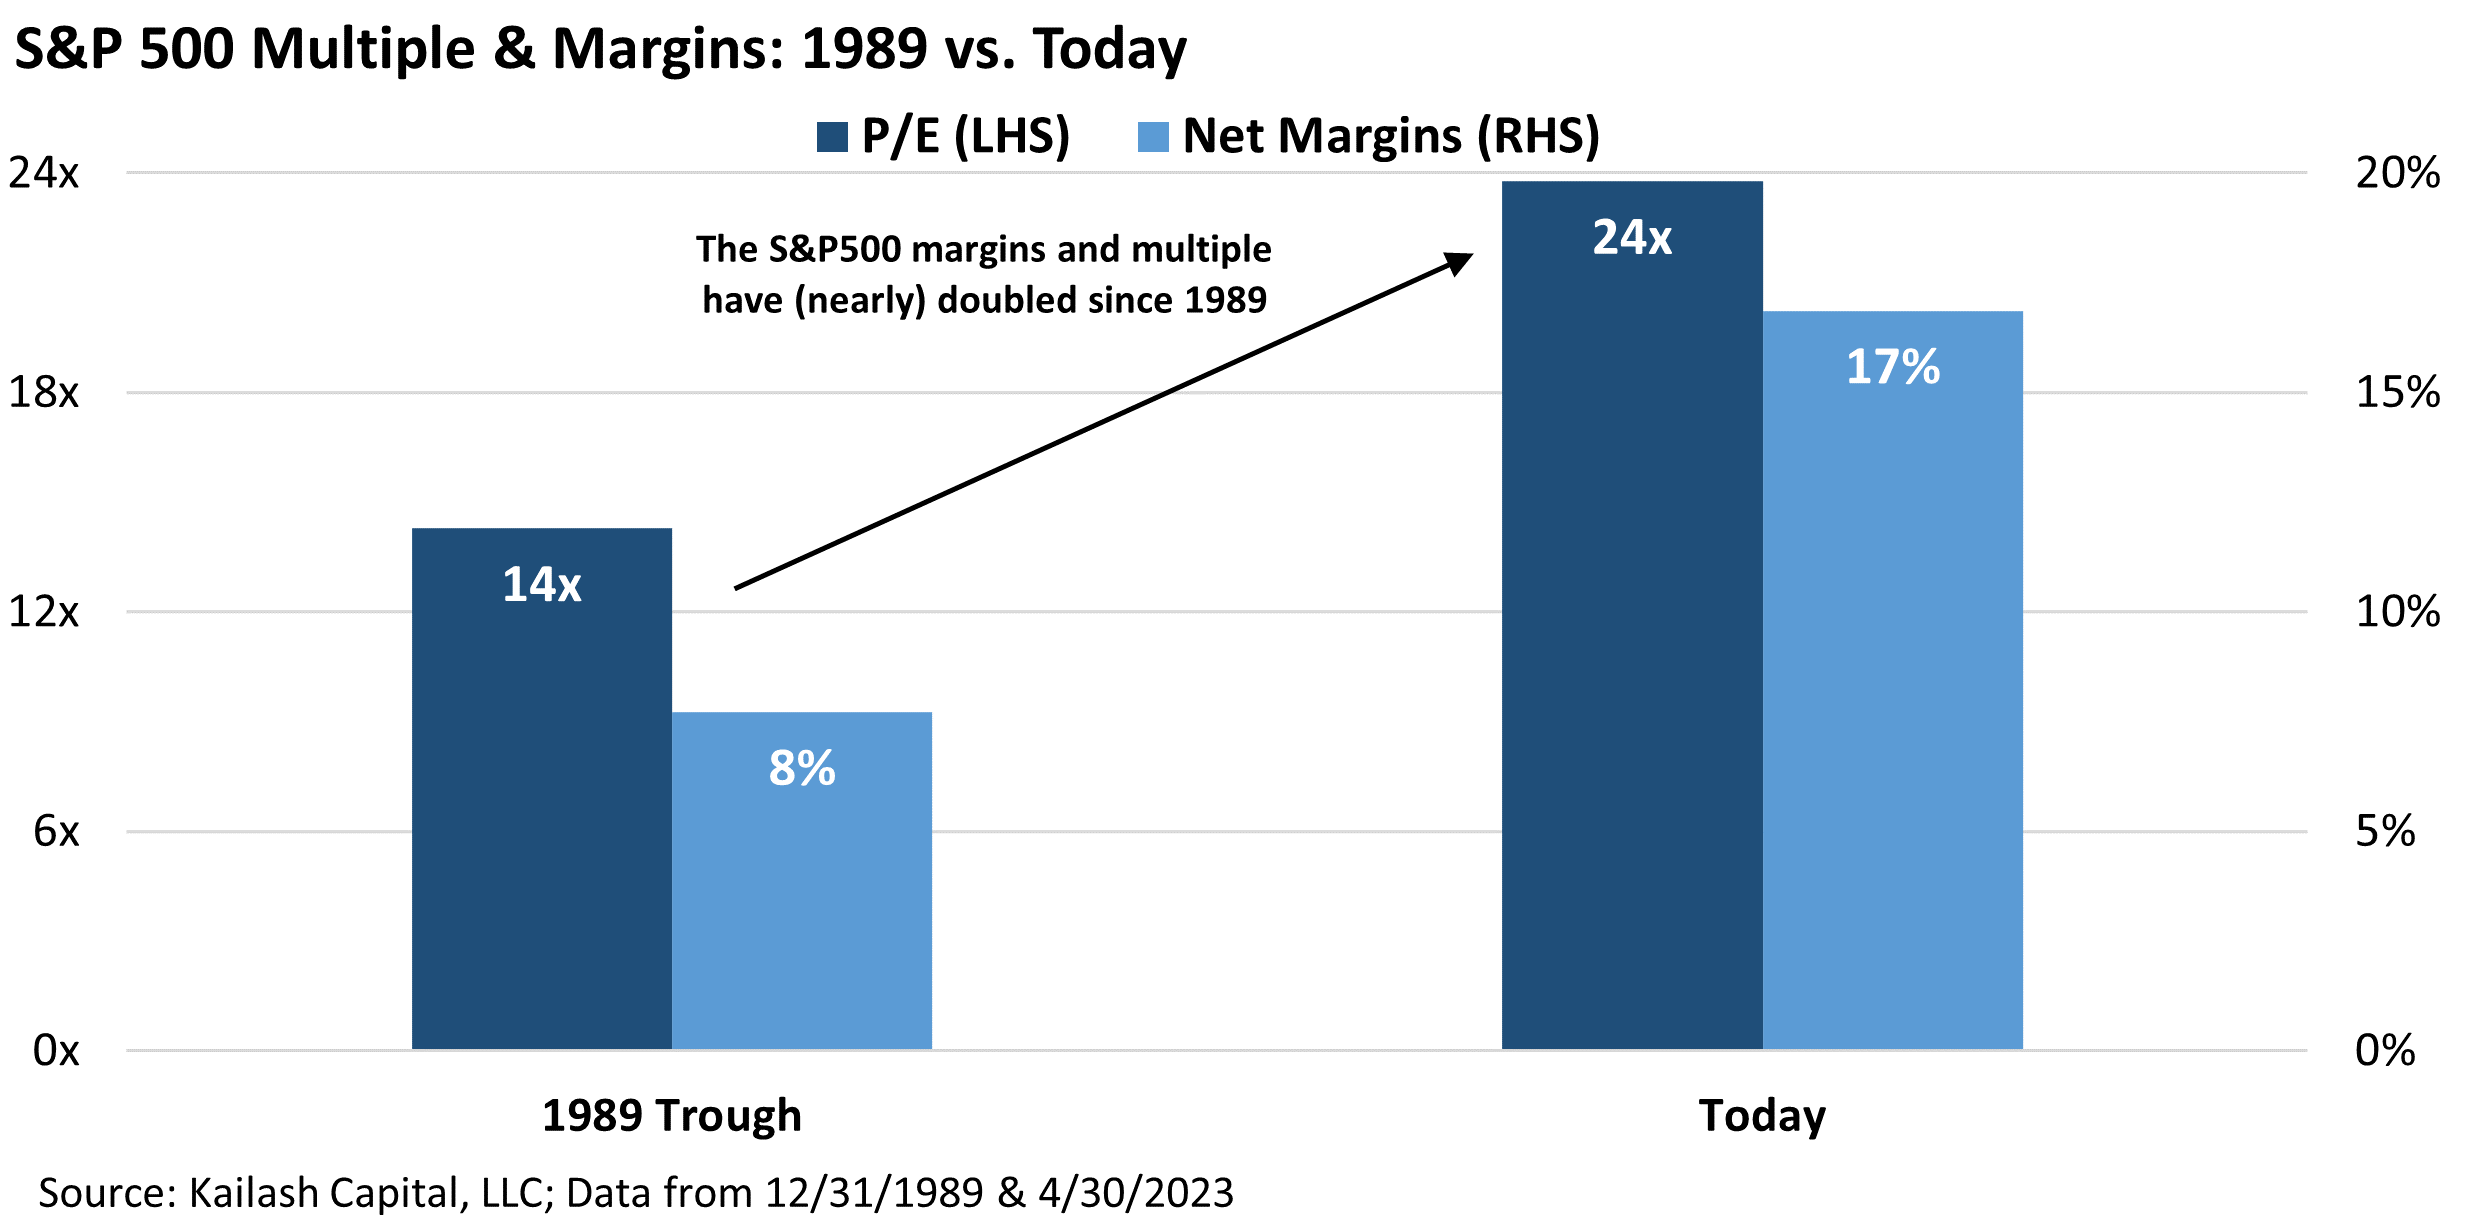 S&P 500 Multiple & Margins